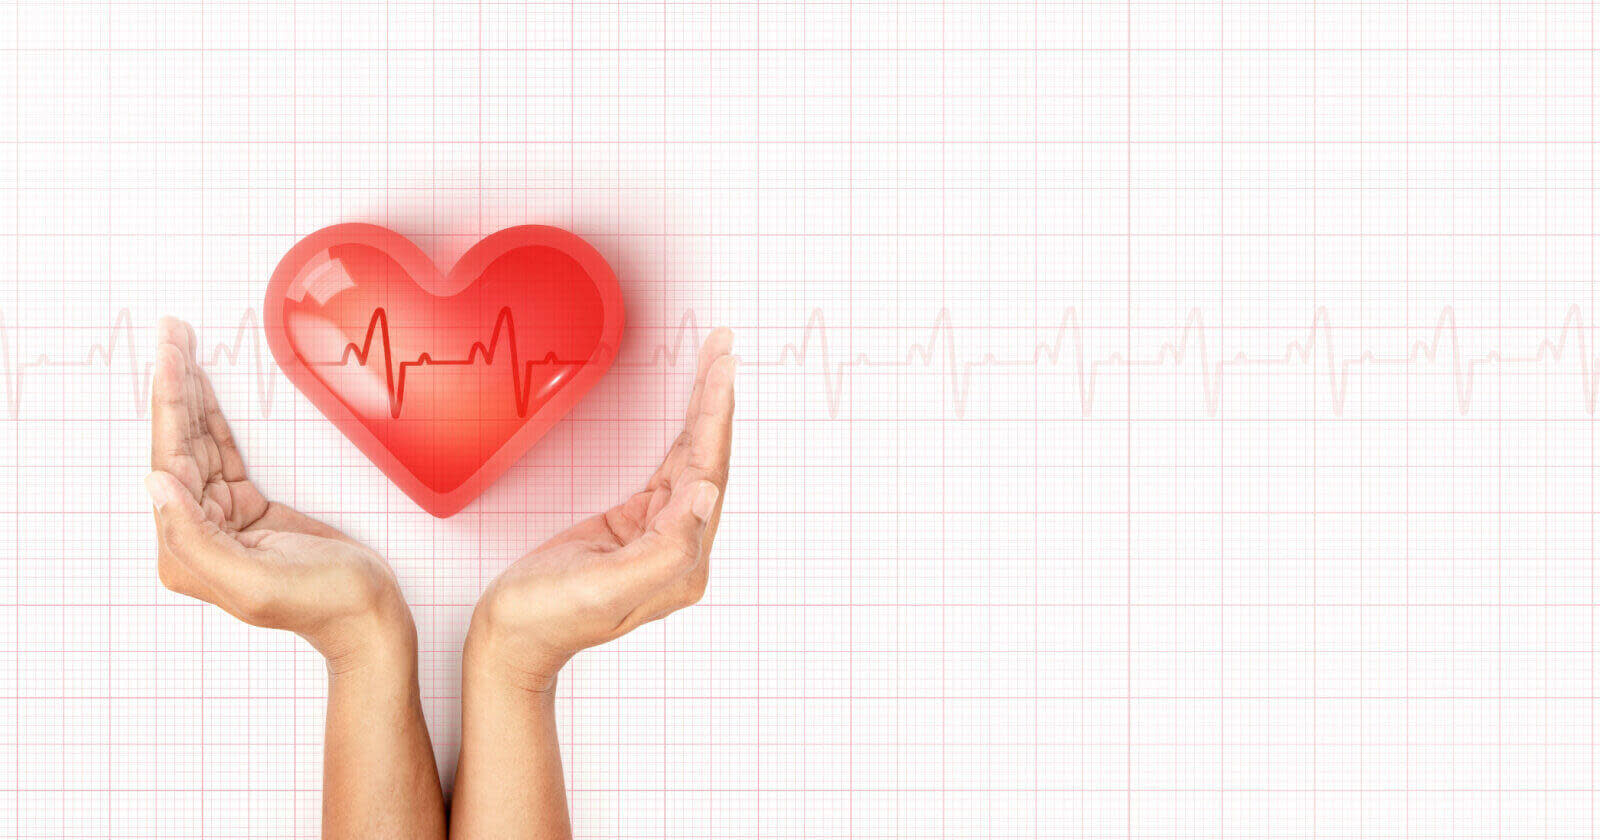 cardiovascular-health-women-gender-differences-heart-disease